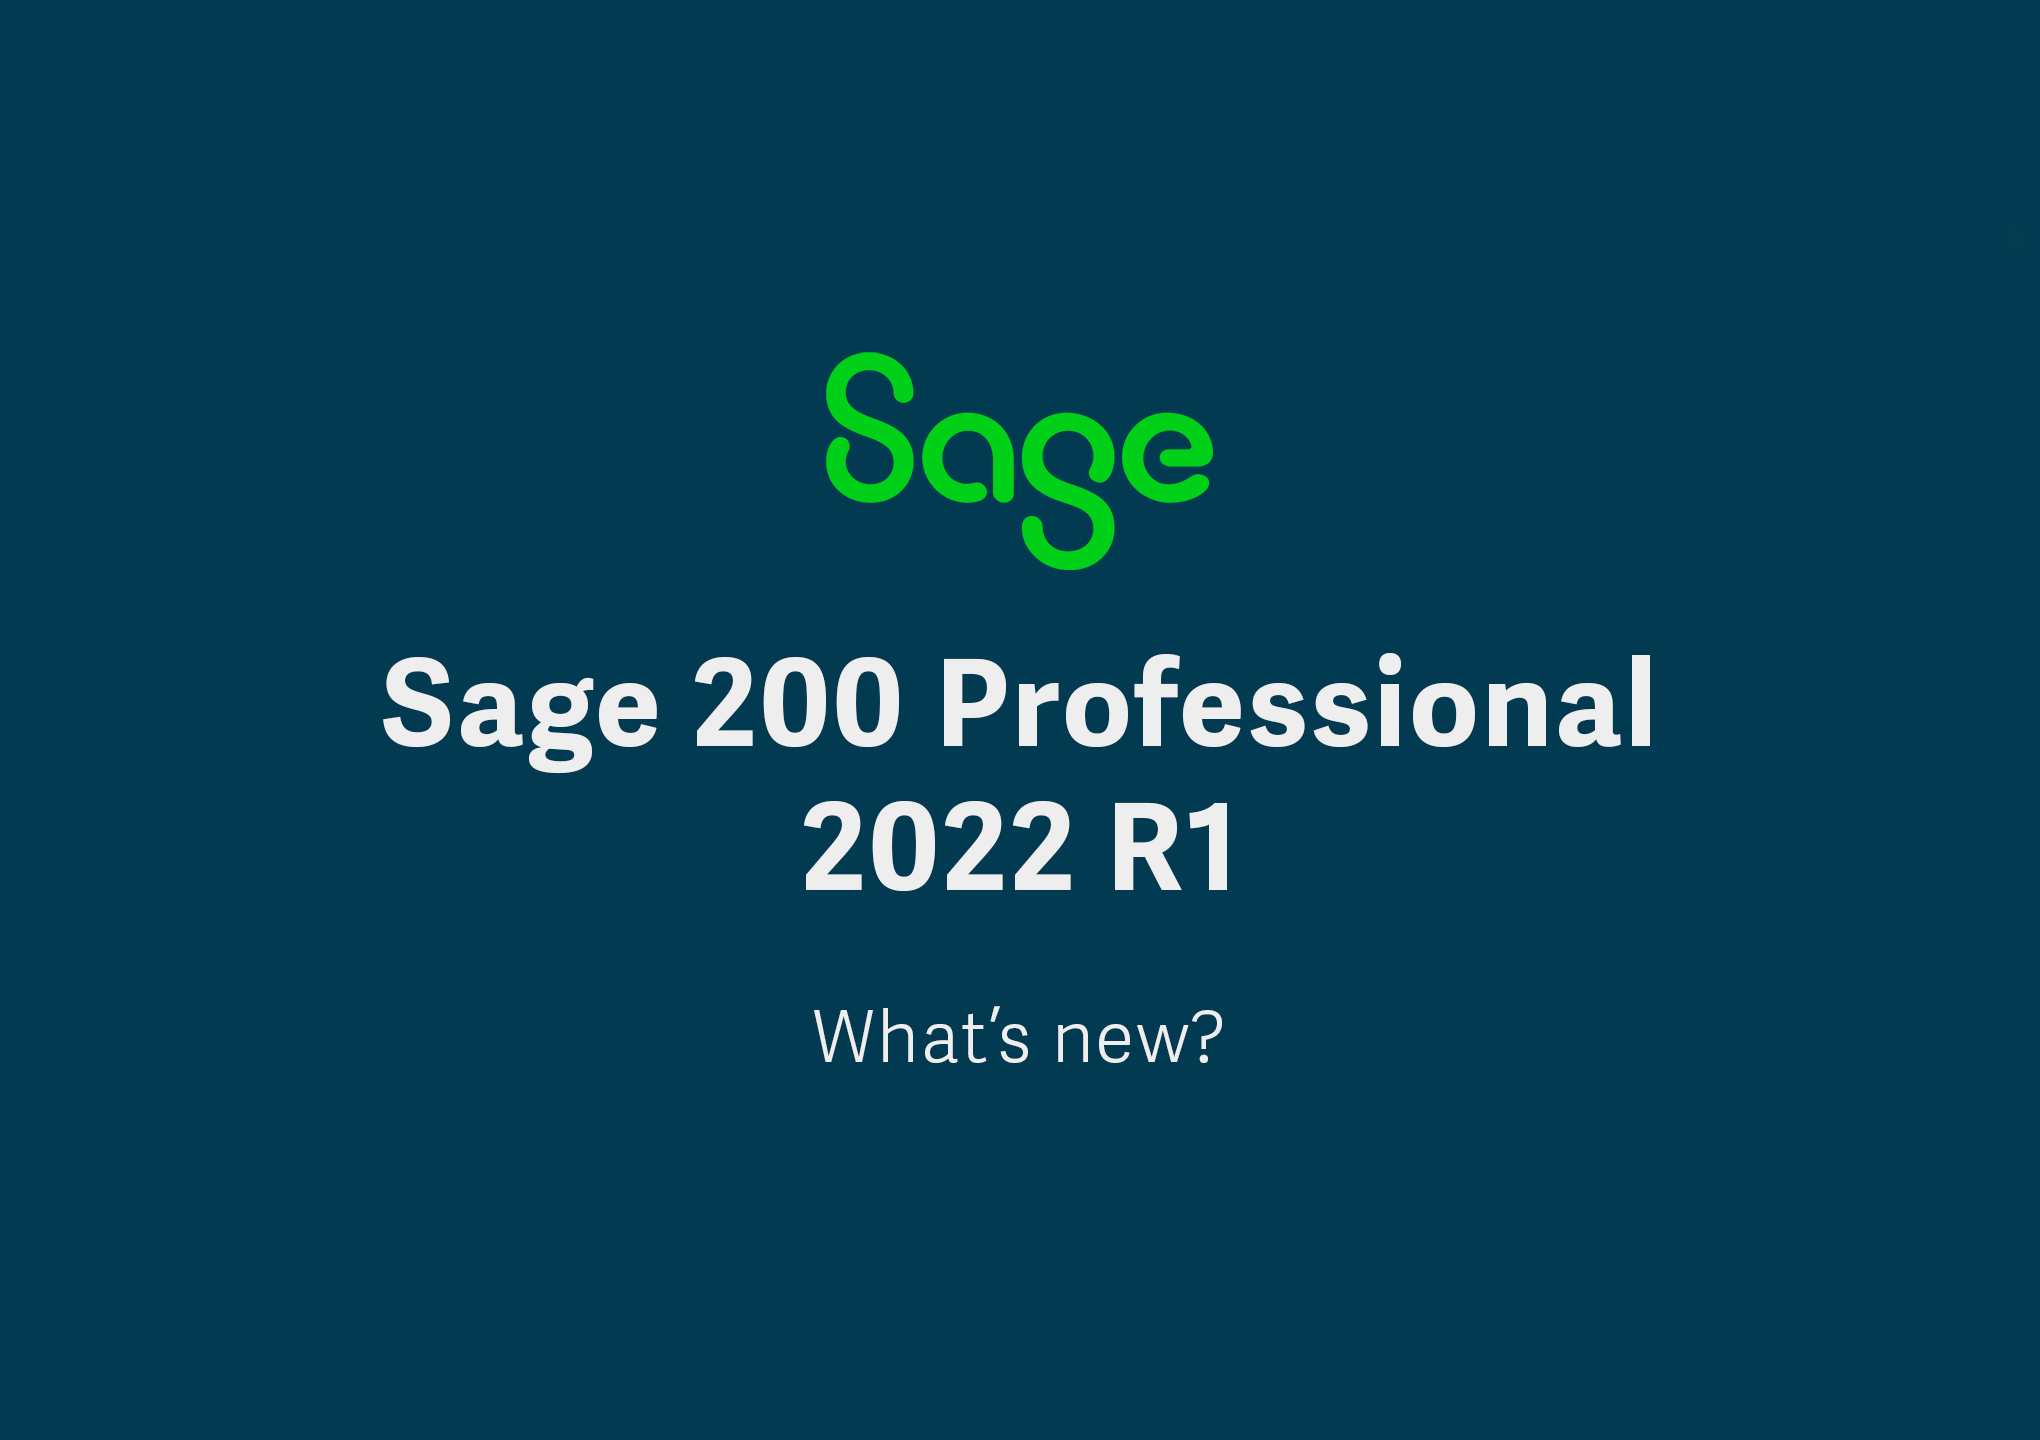 Sage 200 Professional 2022 R1